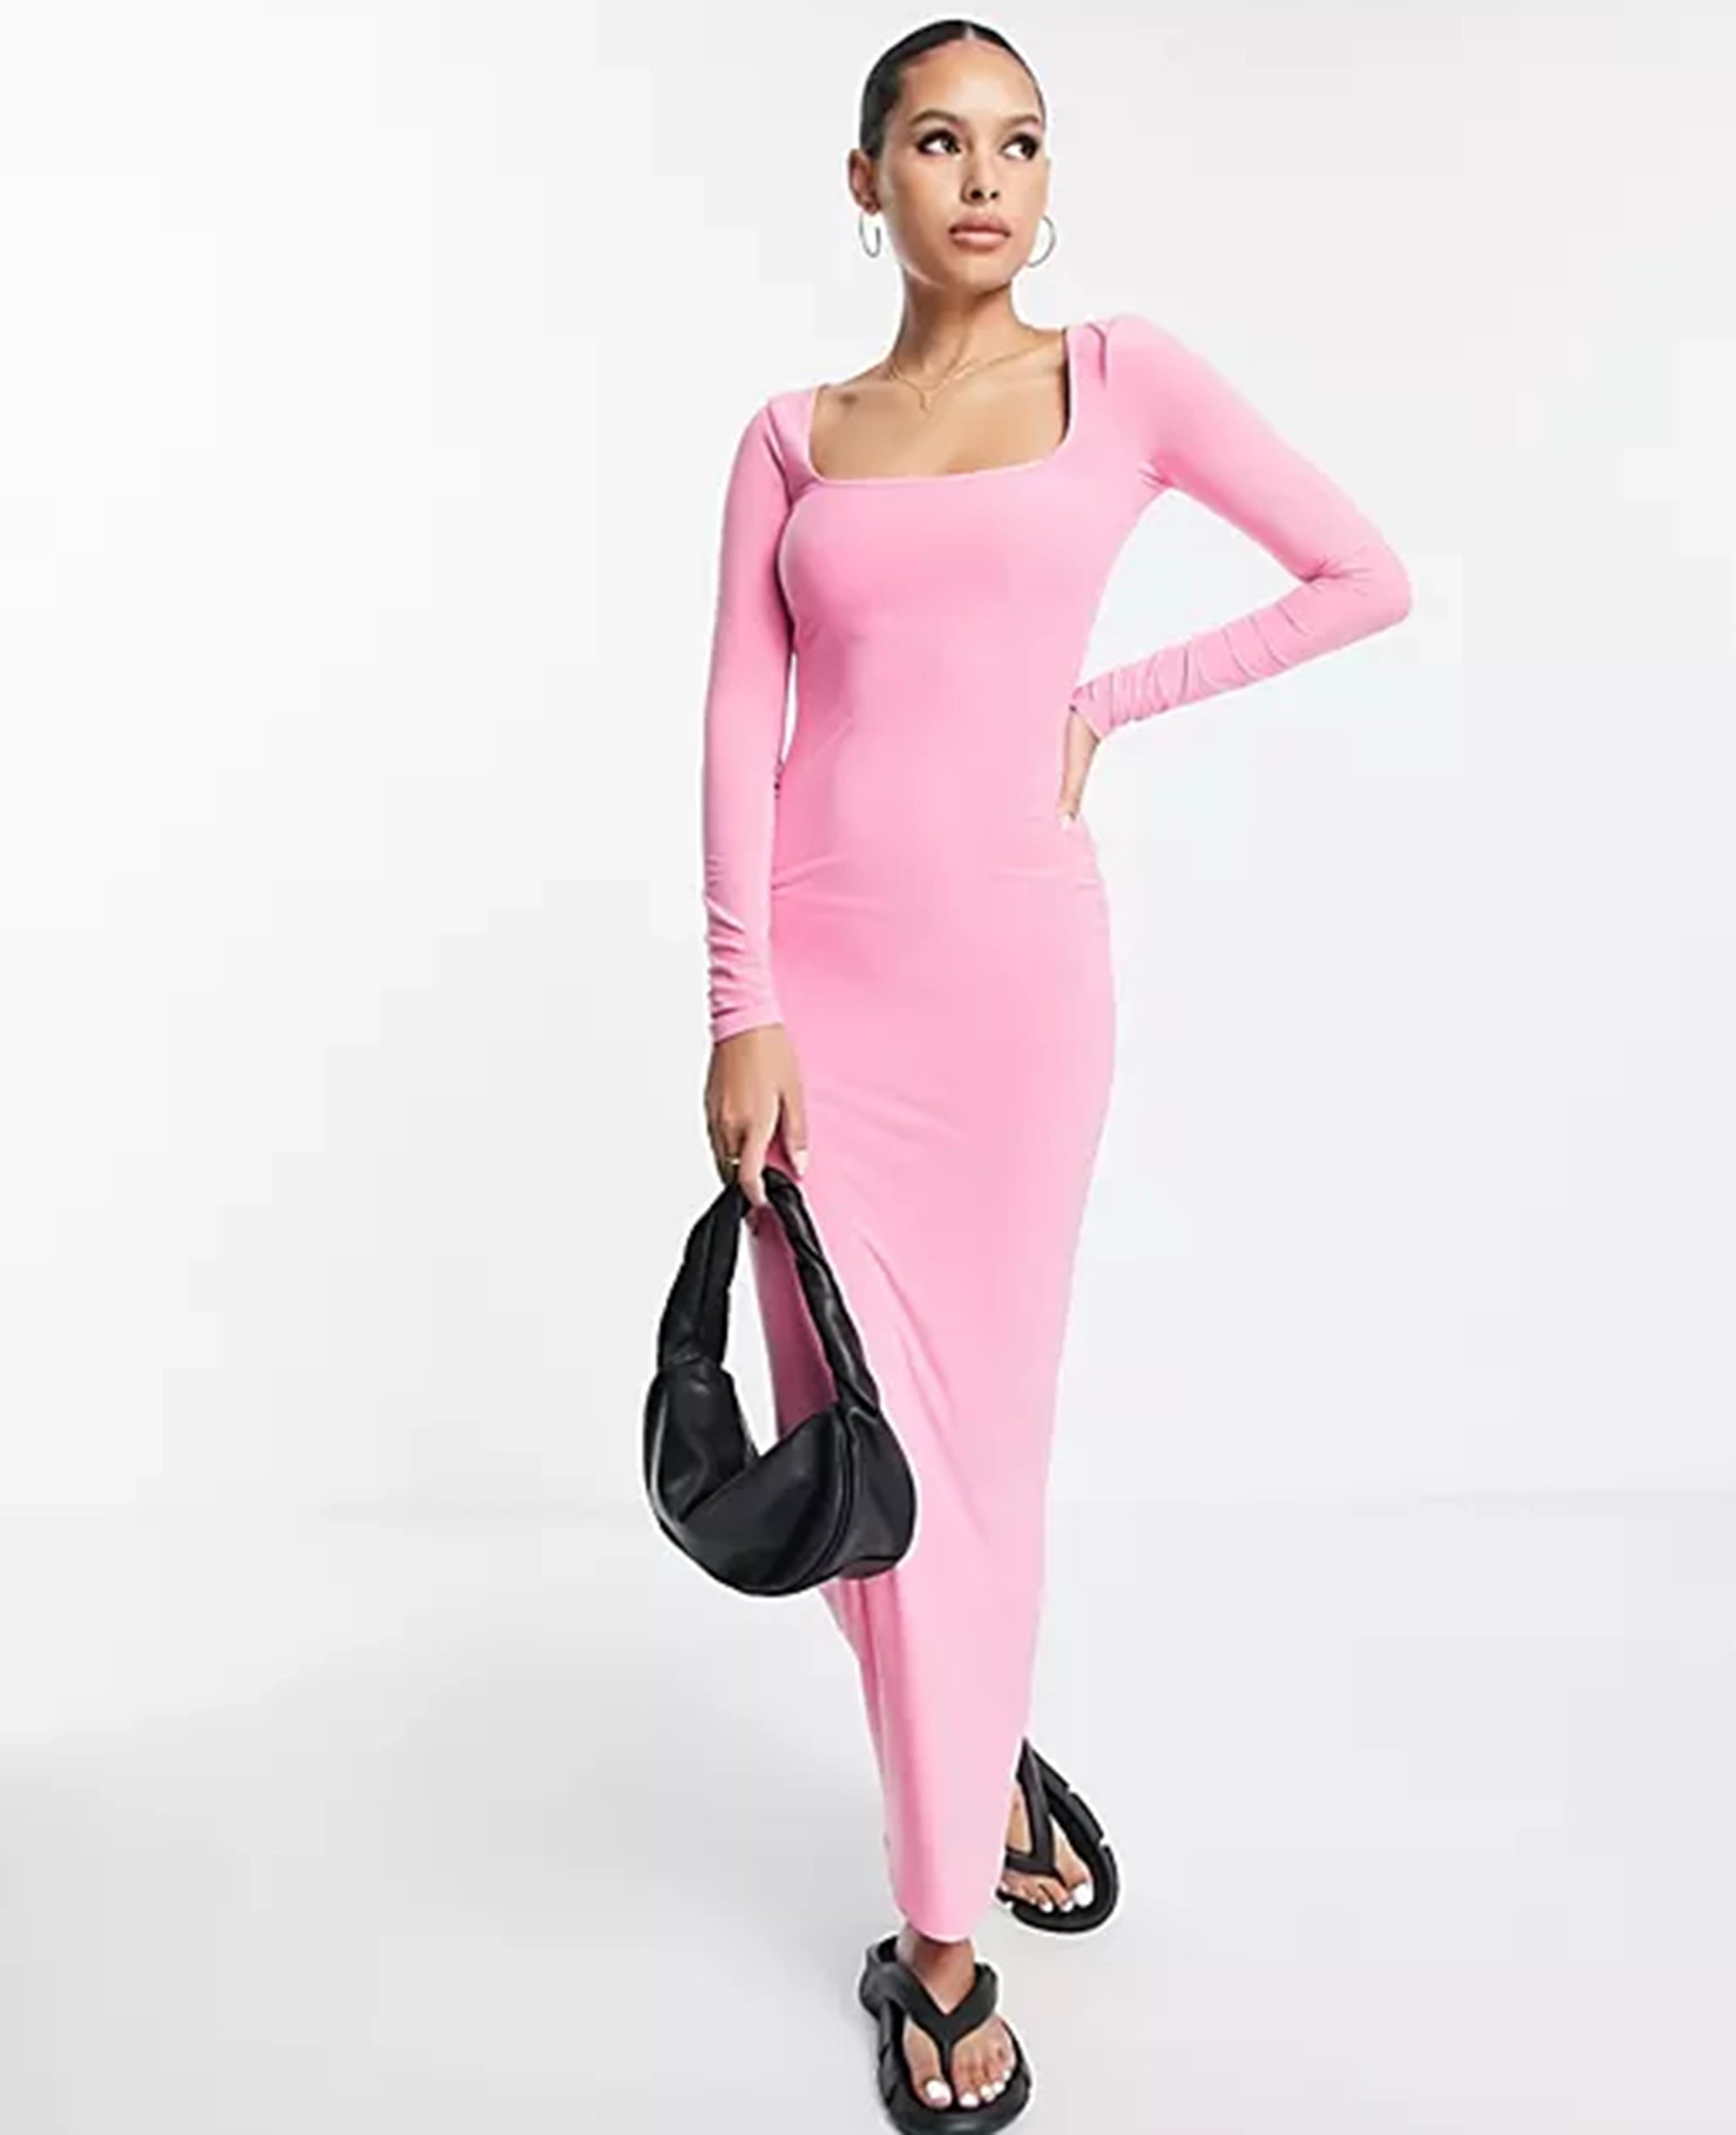 Skims Light Pink Bodycon Dress  Pink bodycon dresses, Pink maxi